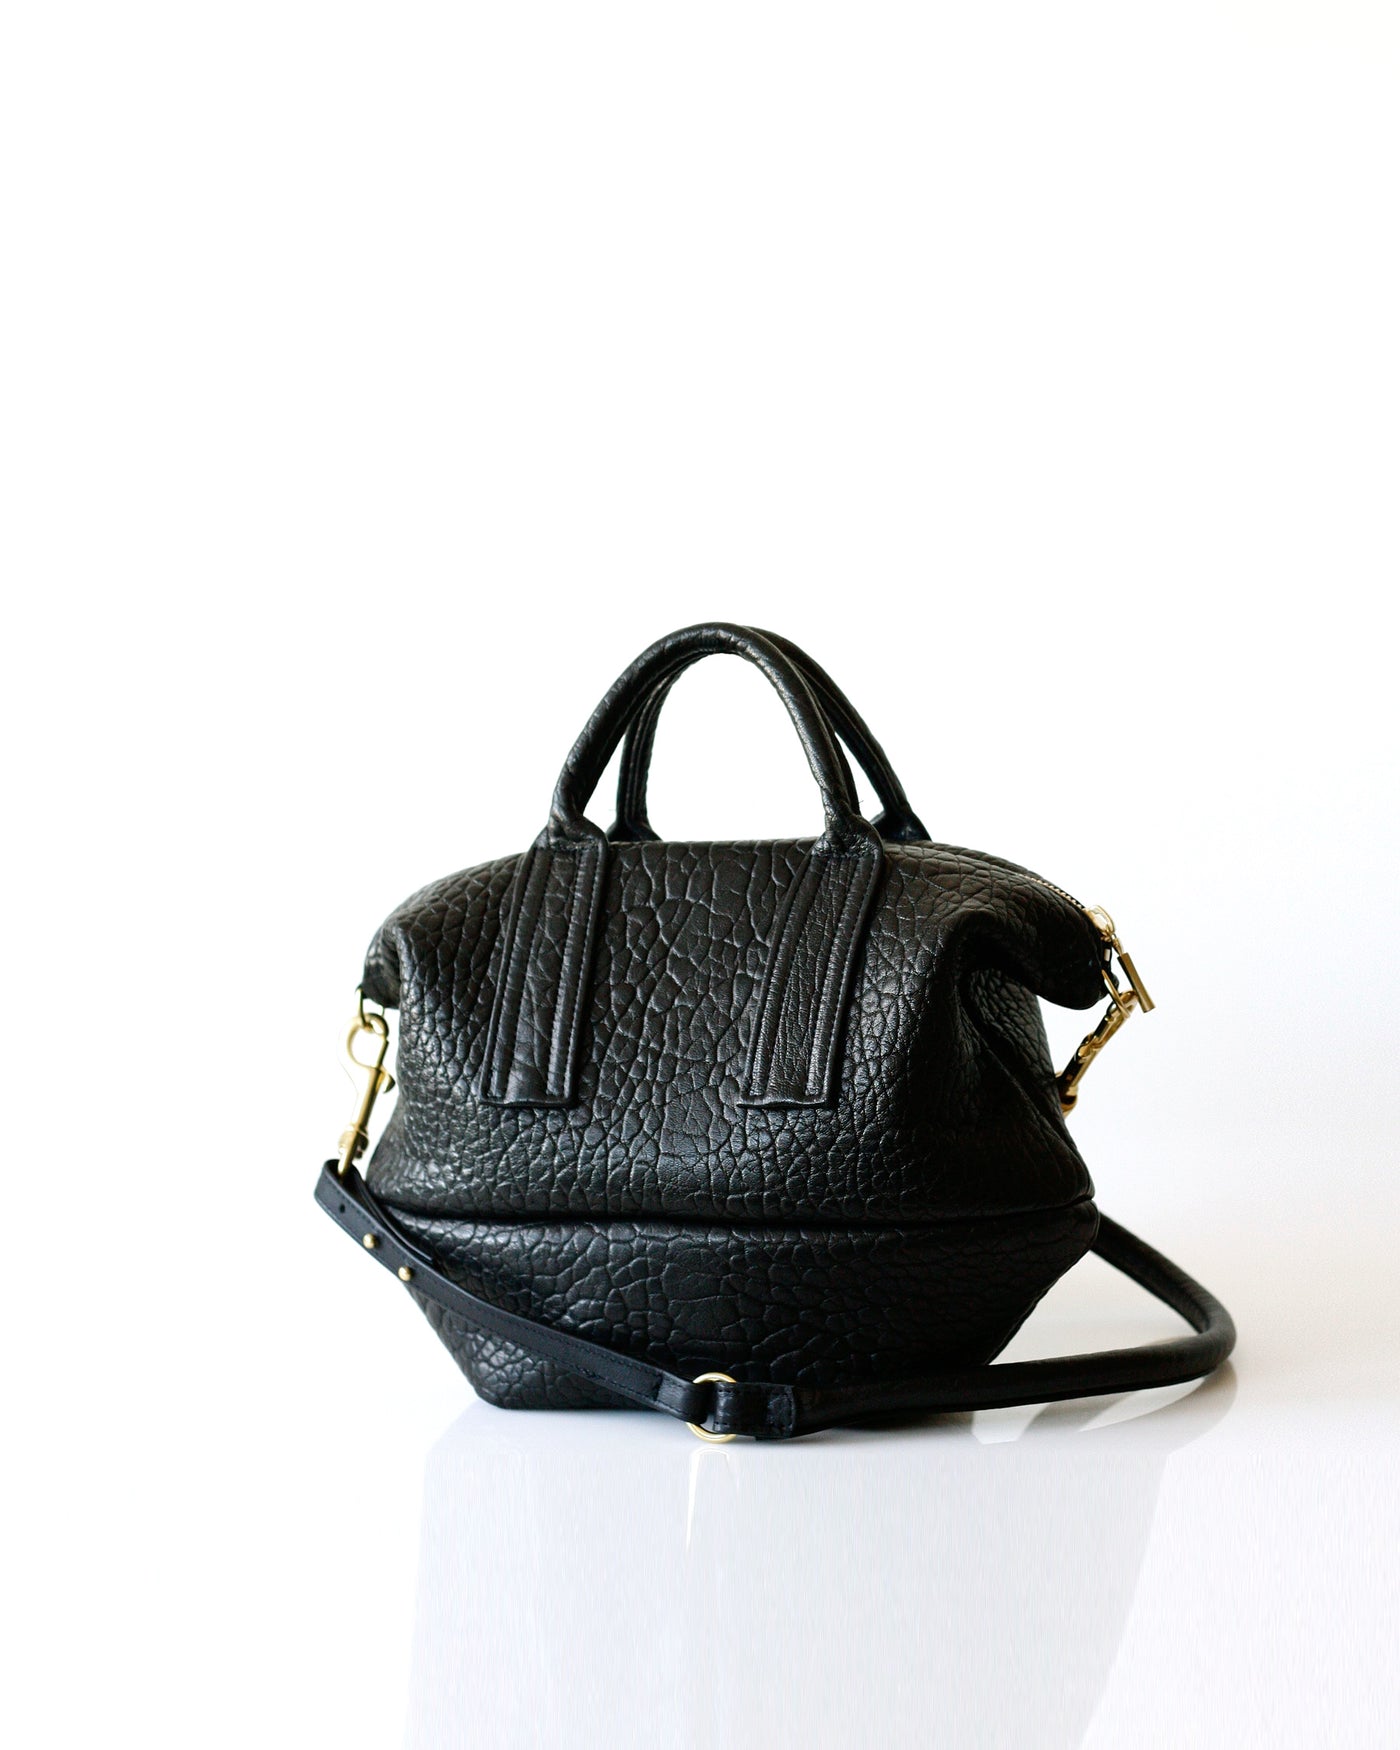 mVanda | Shrunken Lamb - Opelle bag Shrunken Lamb - Opelle leather handbag handcrafted leather bag toronto Canada